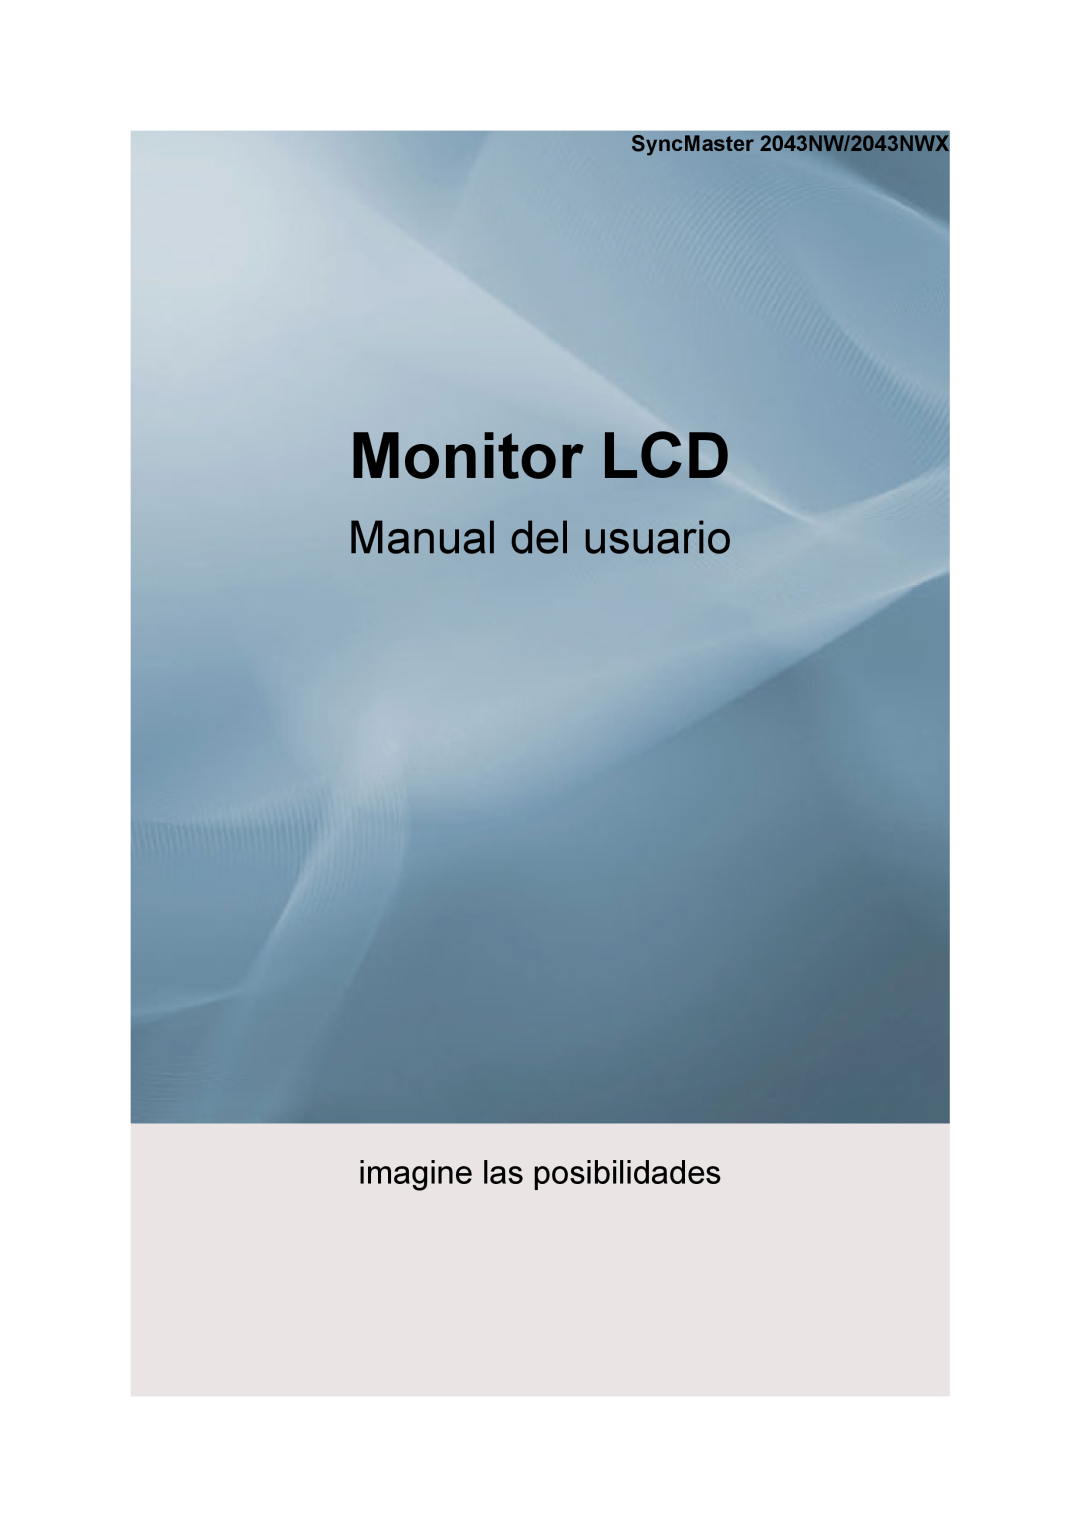 Samsung LS20MYNKBB/EDC manual SyncMaster 2043NW/2043NWX, Monitor LCD, Manual del usuario, imagine las posibilidades 